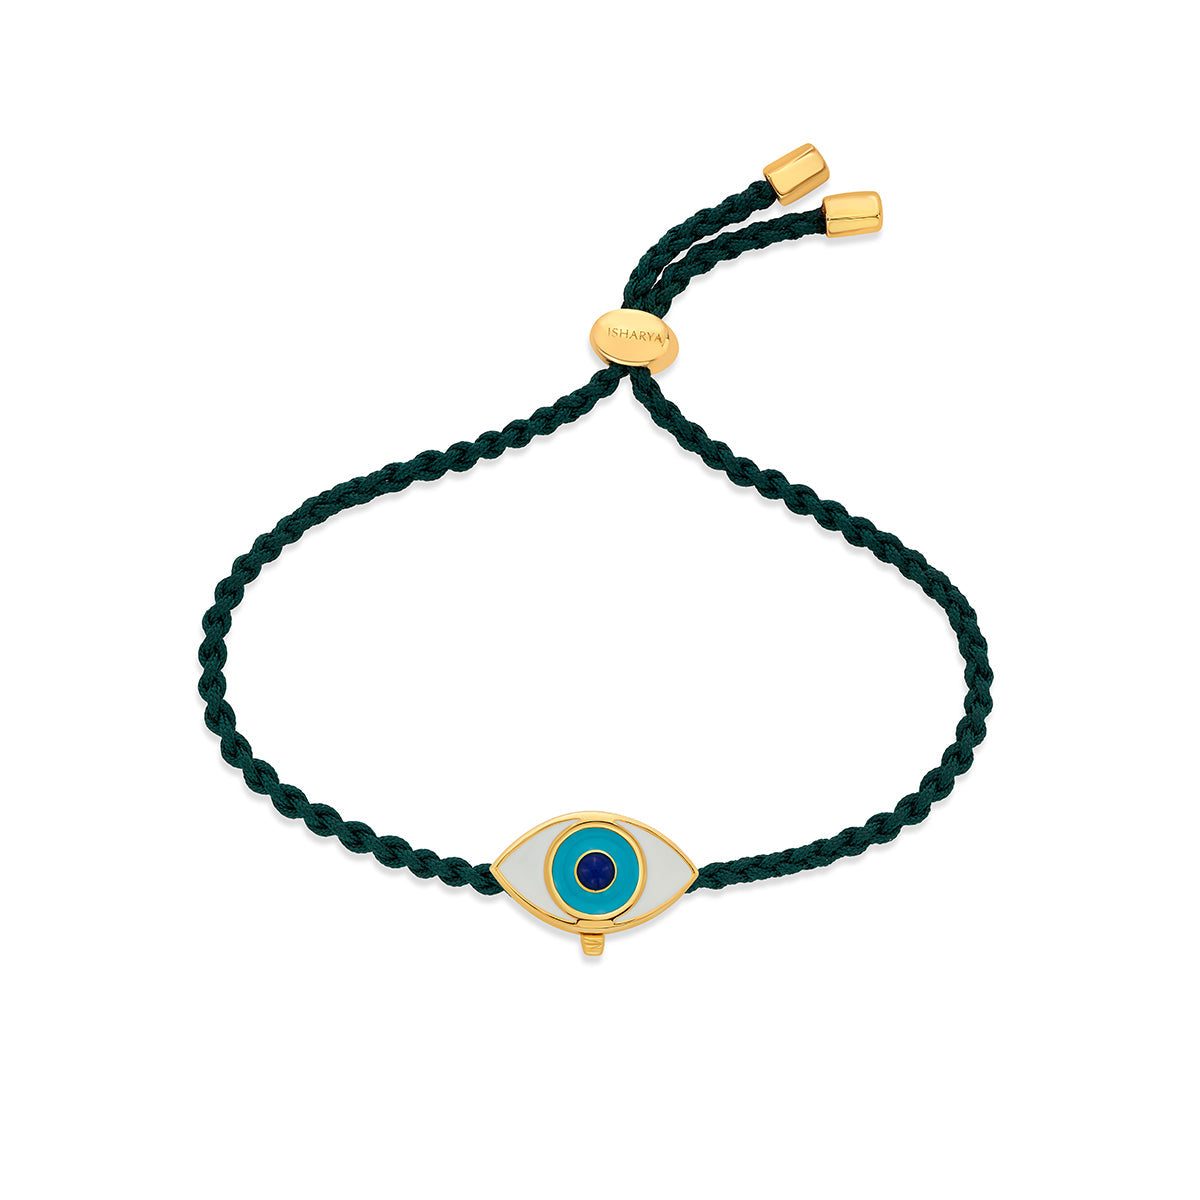 Knot Bracelet - Isharya | Modern Indian Jewelry